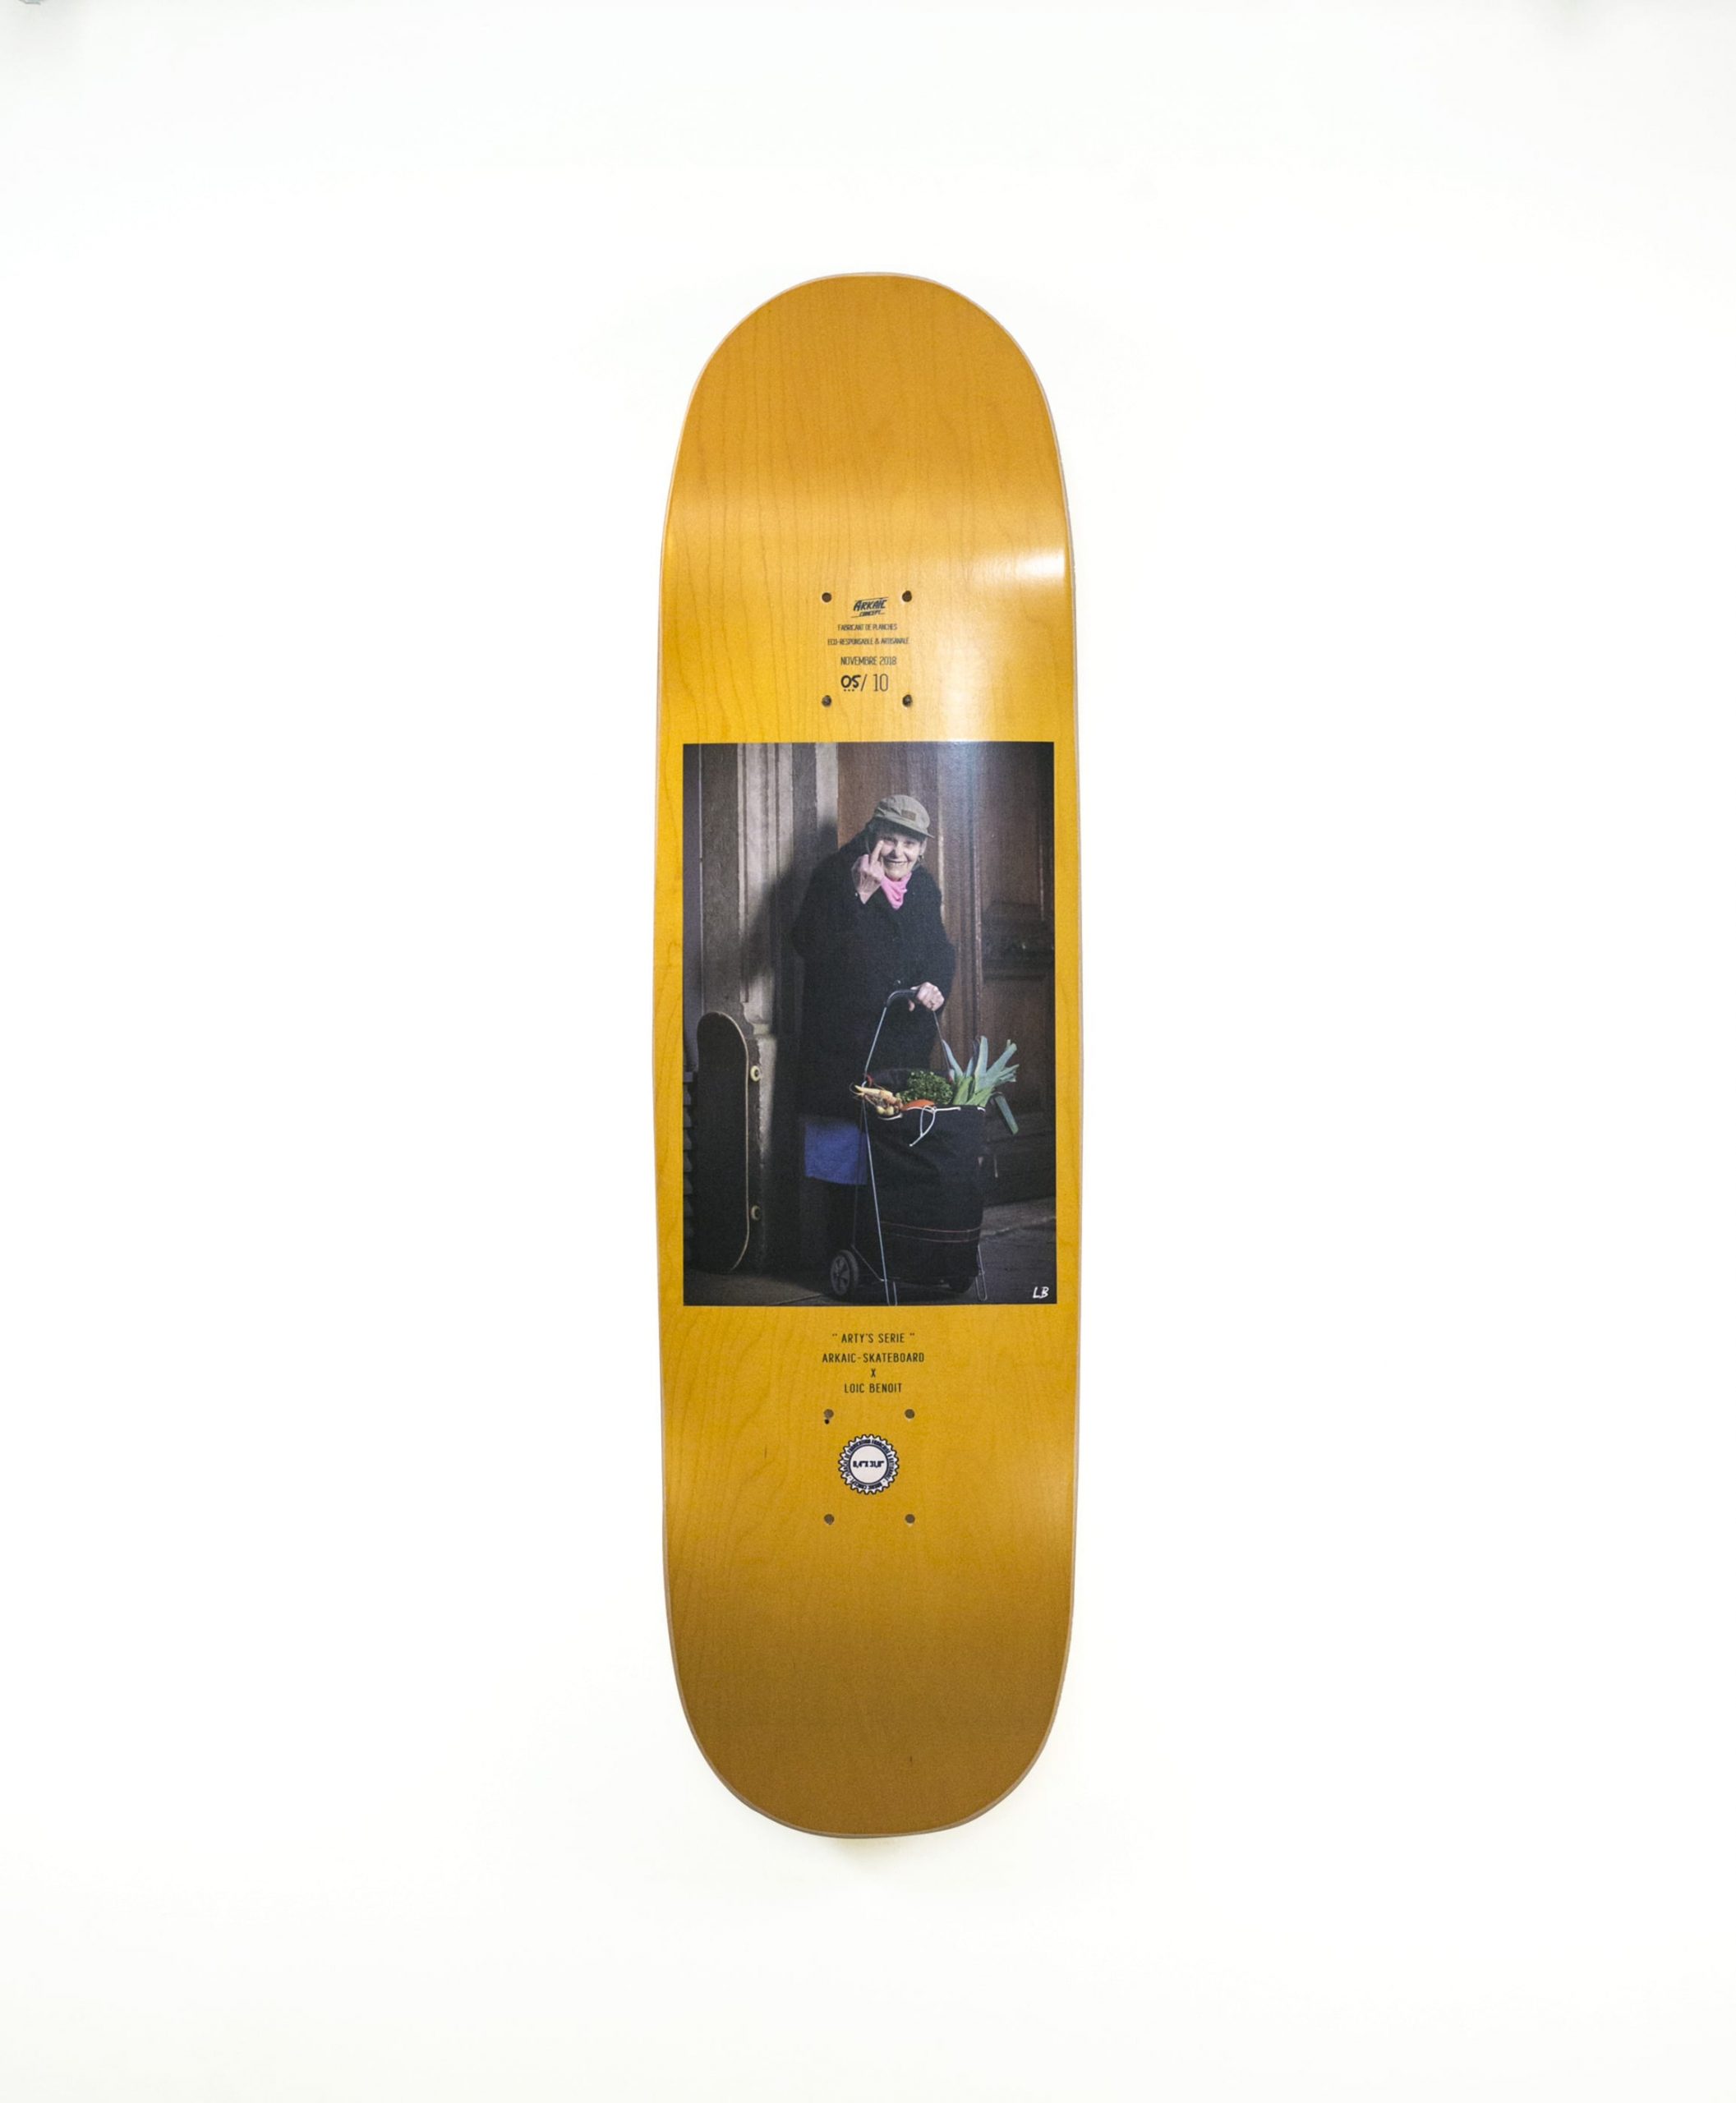 Collaboration Loic Benoit Fuckin Mamy Rock'n Root's Arkaic Skateboard cruiser pumptrack skateboard fabriqué en france par arkaic concept Collection 2019-min